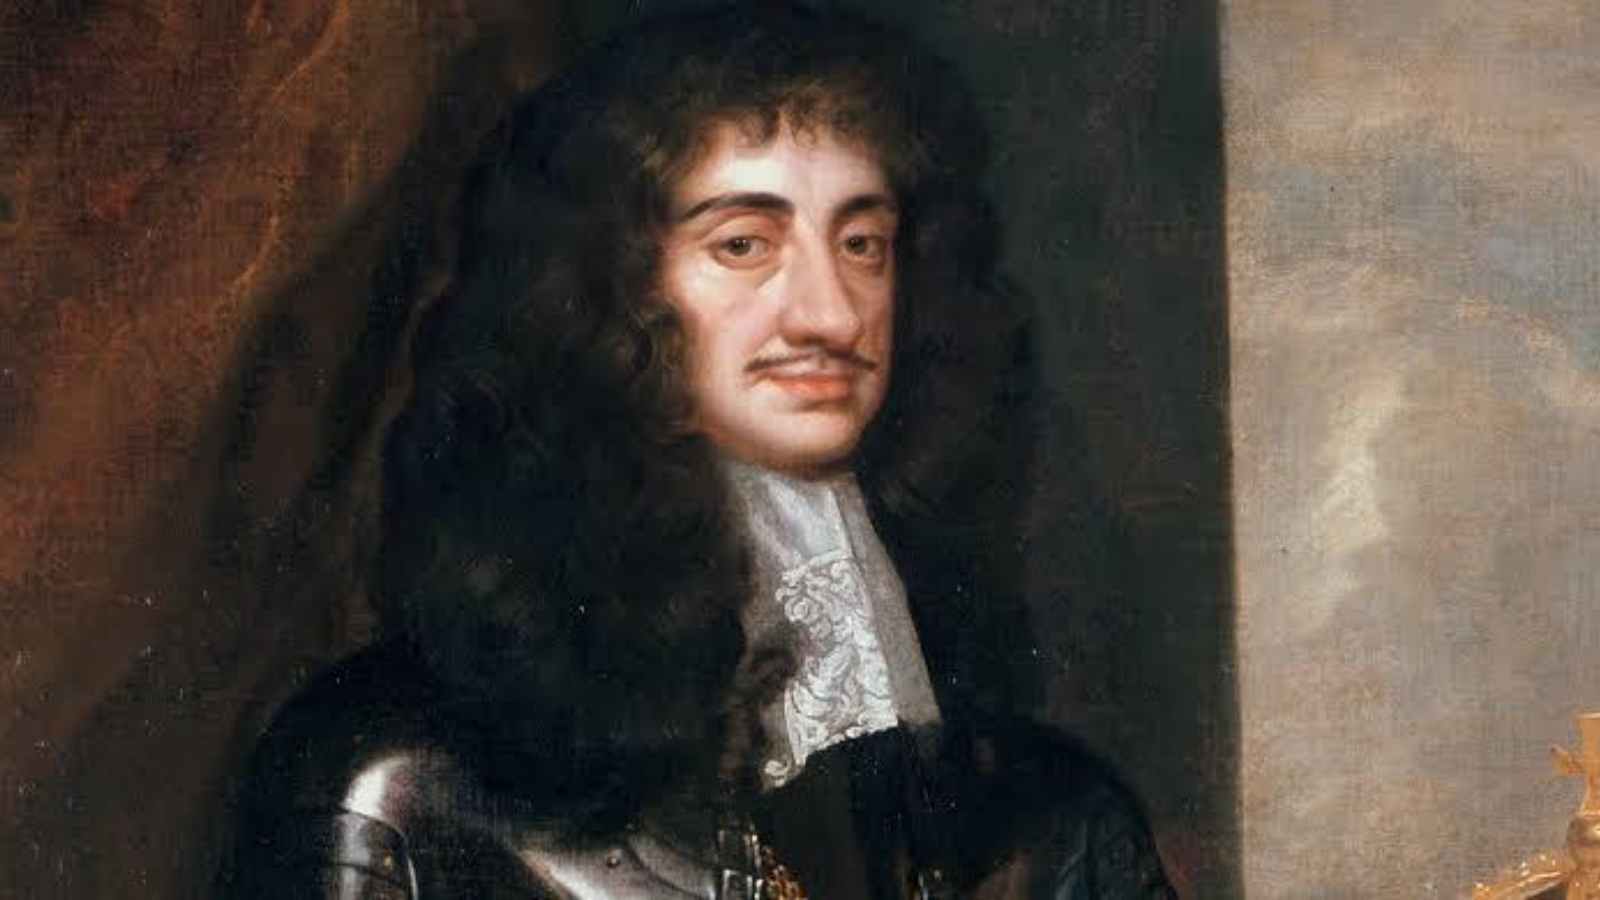 Who was King Charles II?